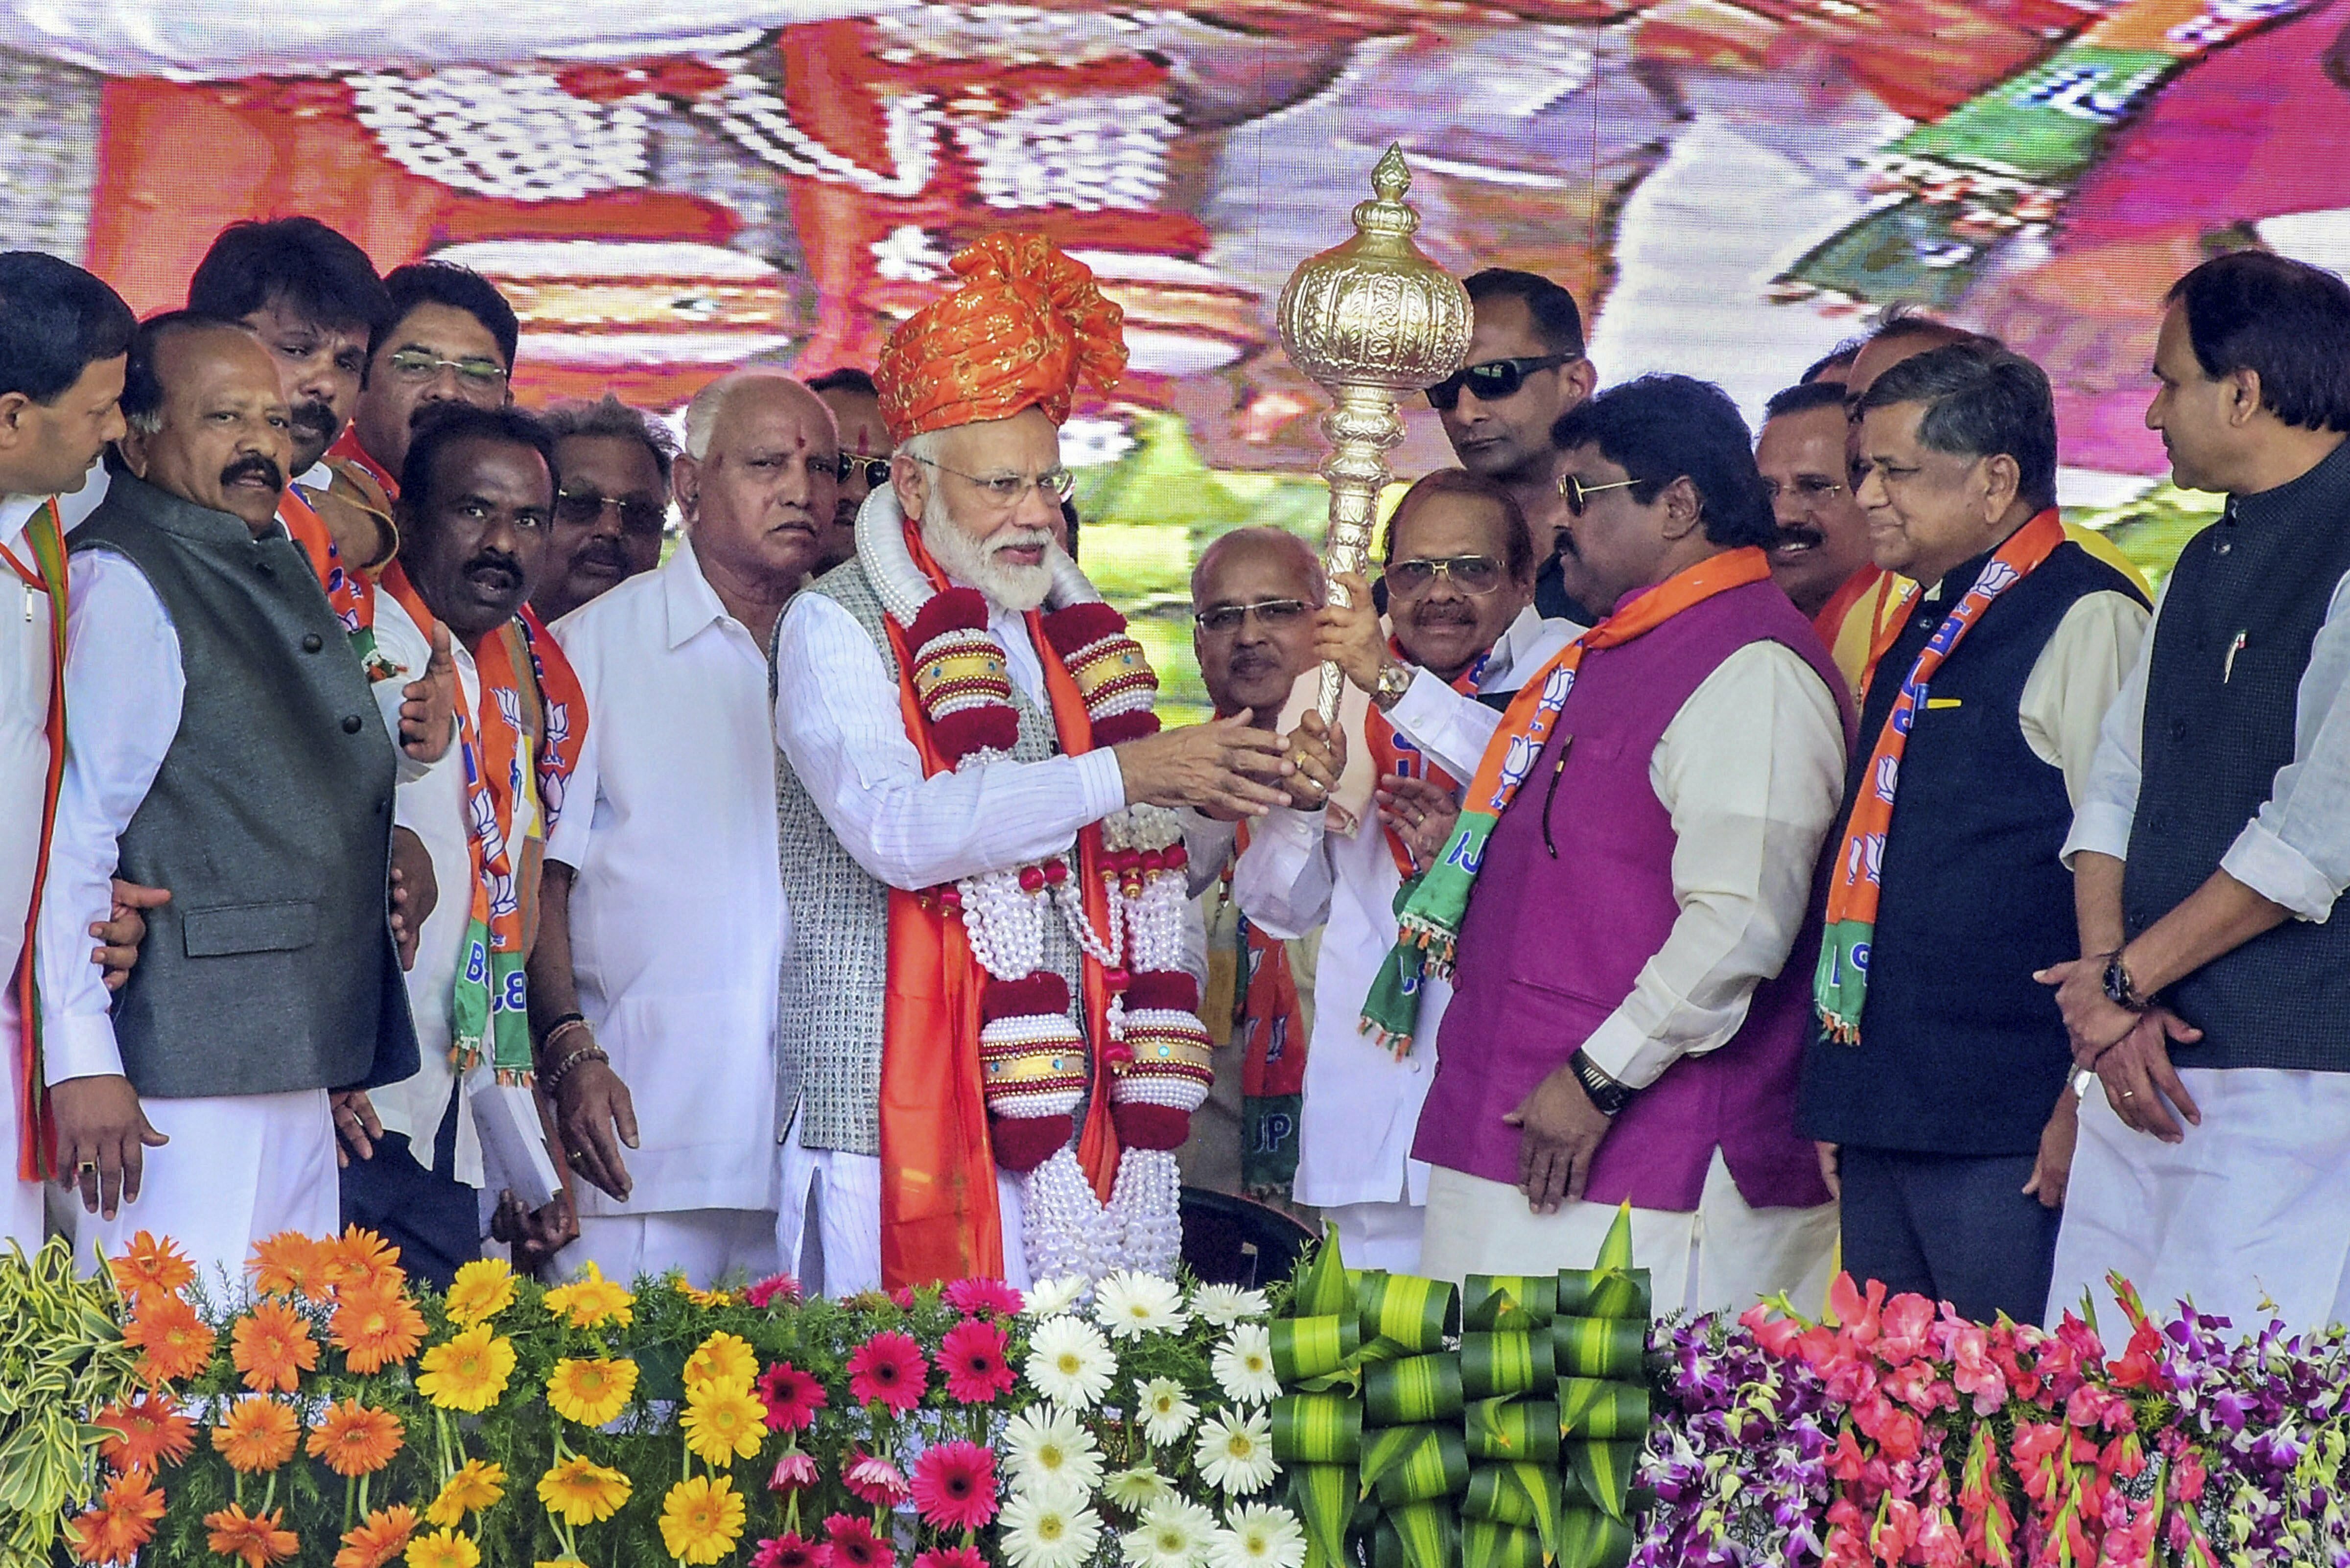 Prime Minister Narendra Modi is felicitated during a rally, in Kalaburagi - AP